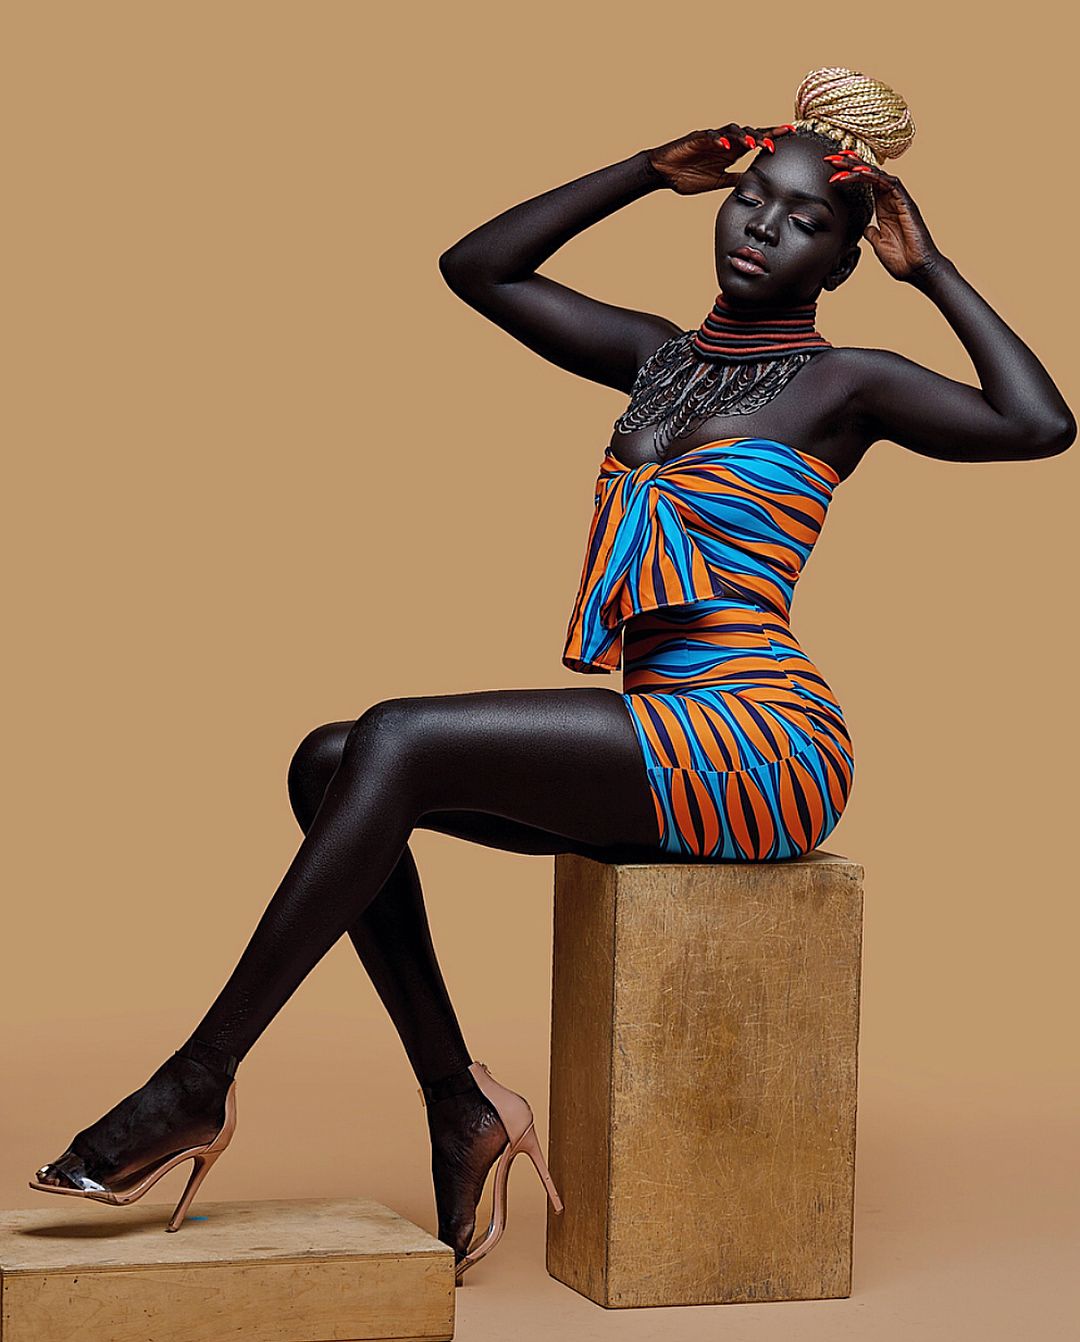 Nyakim gatwechãããinstagramãåçããããããgoddesses at its finest peak melaninmondayð if you want this two pieceâ black beauties afro punk fashion mursi tribe woman